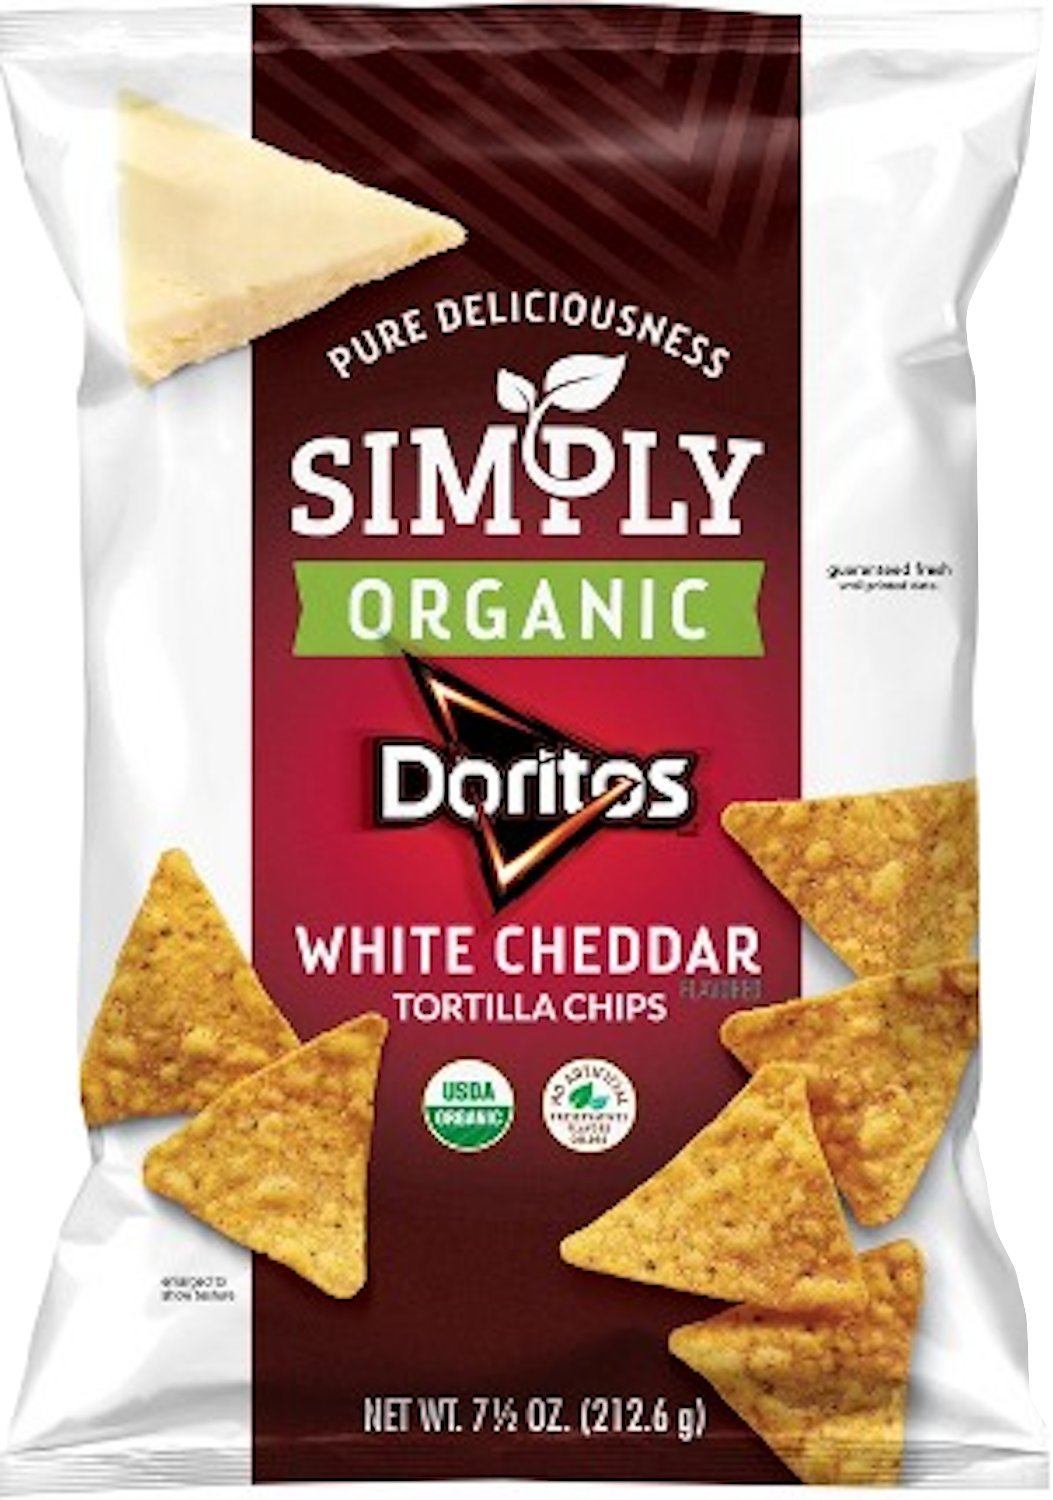 Simply Organic Doritos White Cheddar